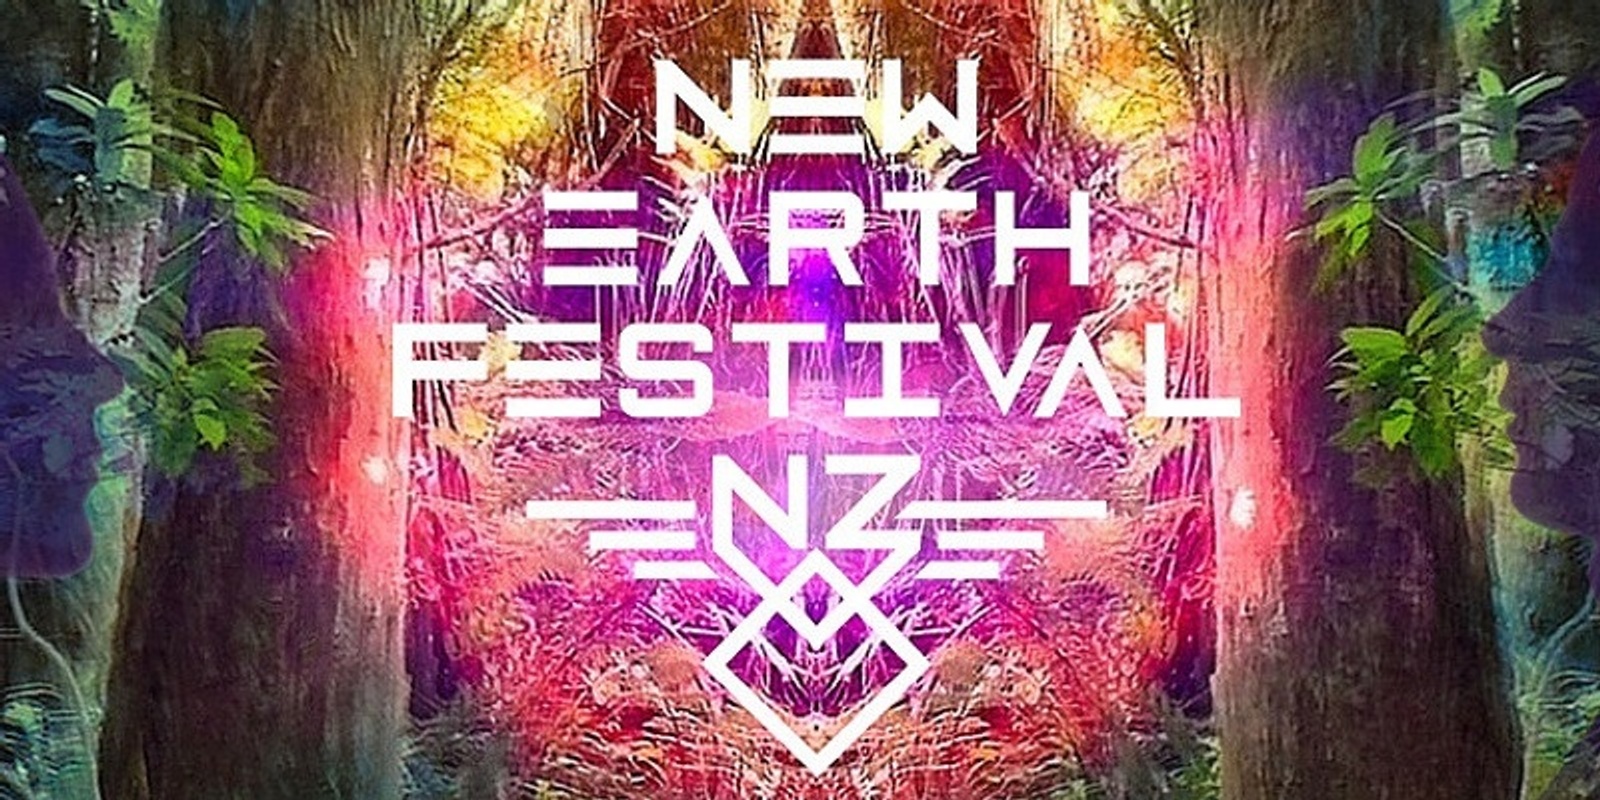 Banner image for NEW EARTH NZ Festival